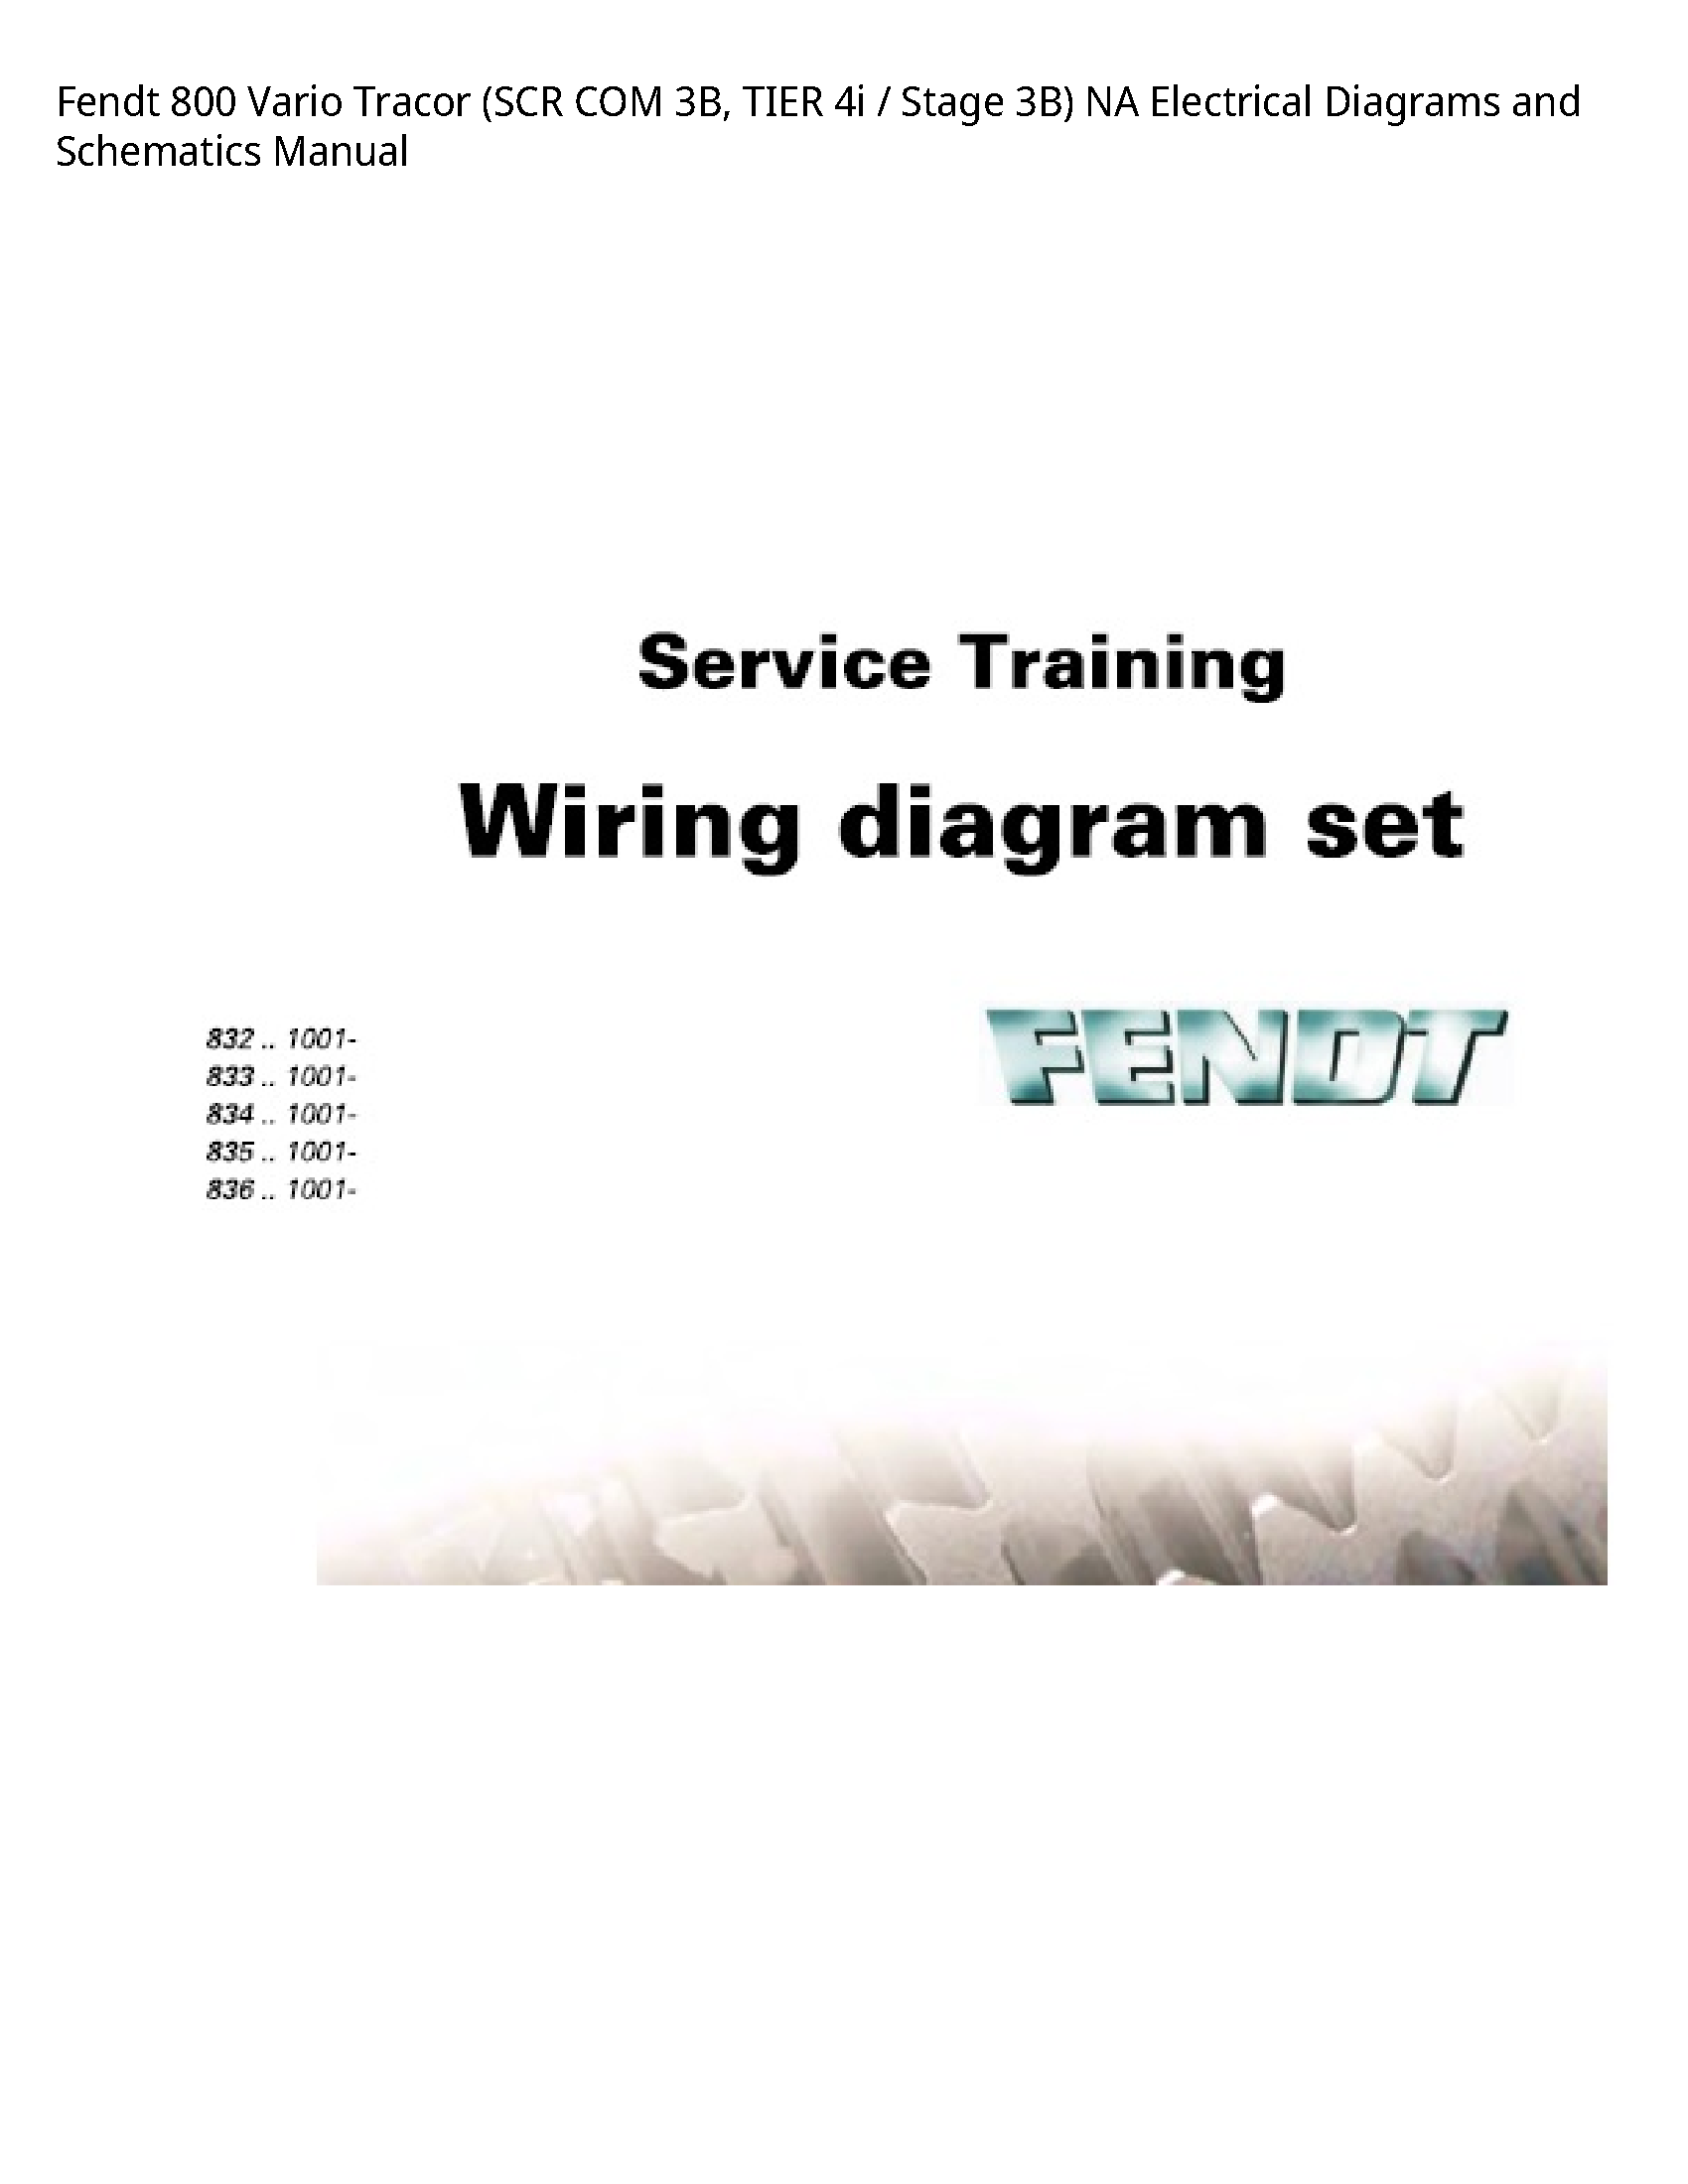 Fendt 800 Vario Tracor (SCR COM TIER Stage NA Electrical Diagrams  Schematics manual